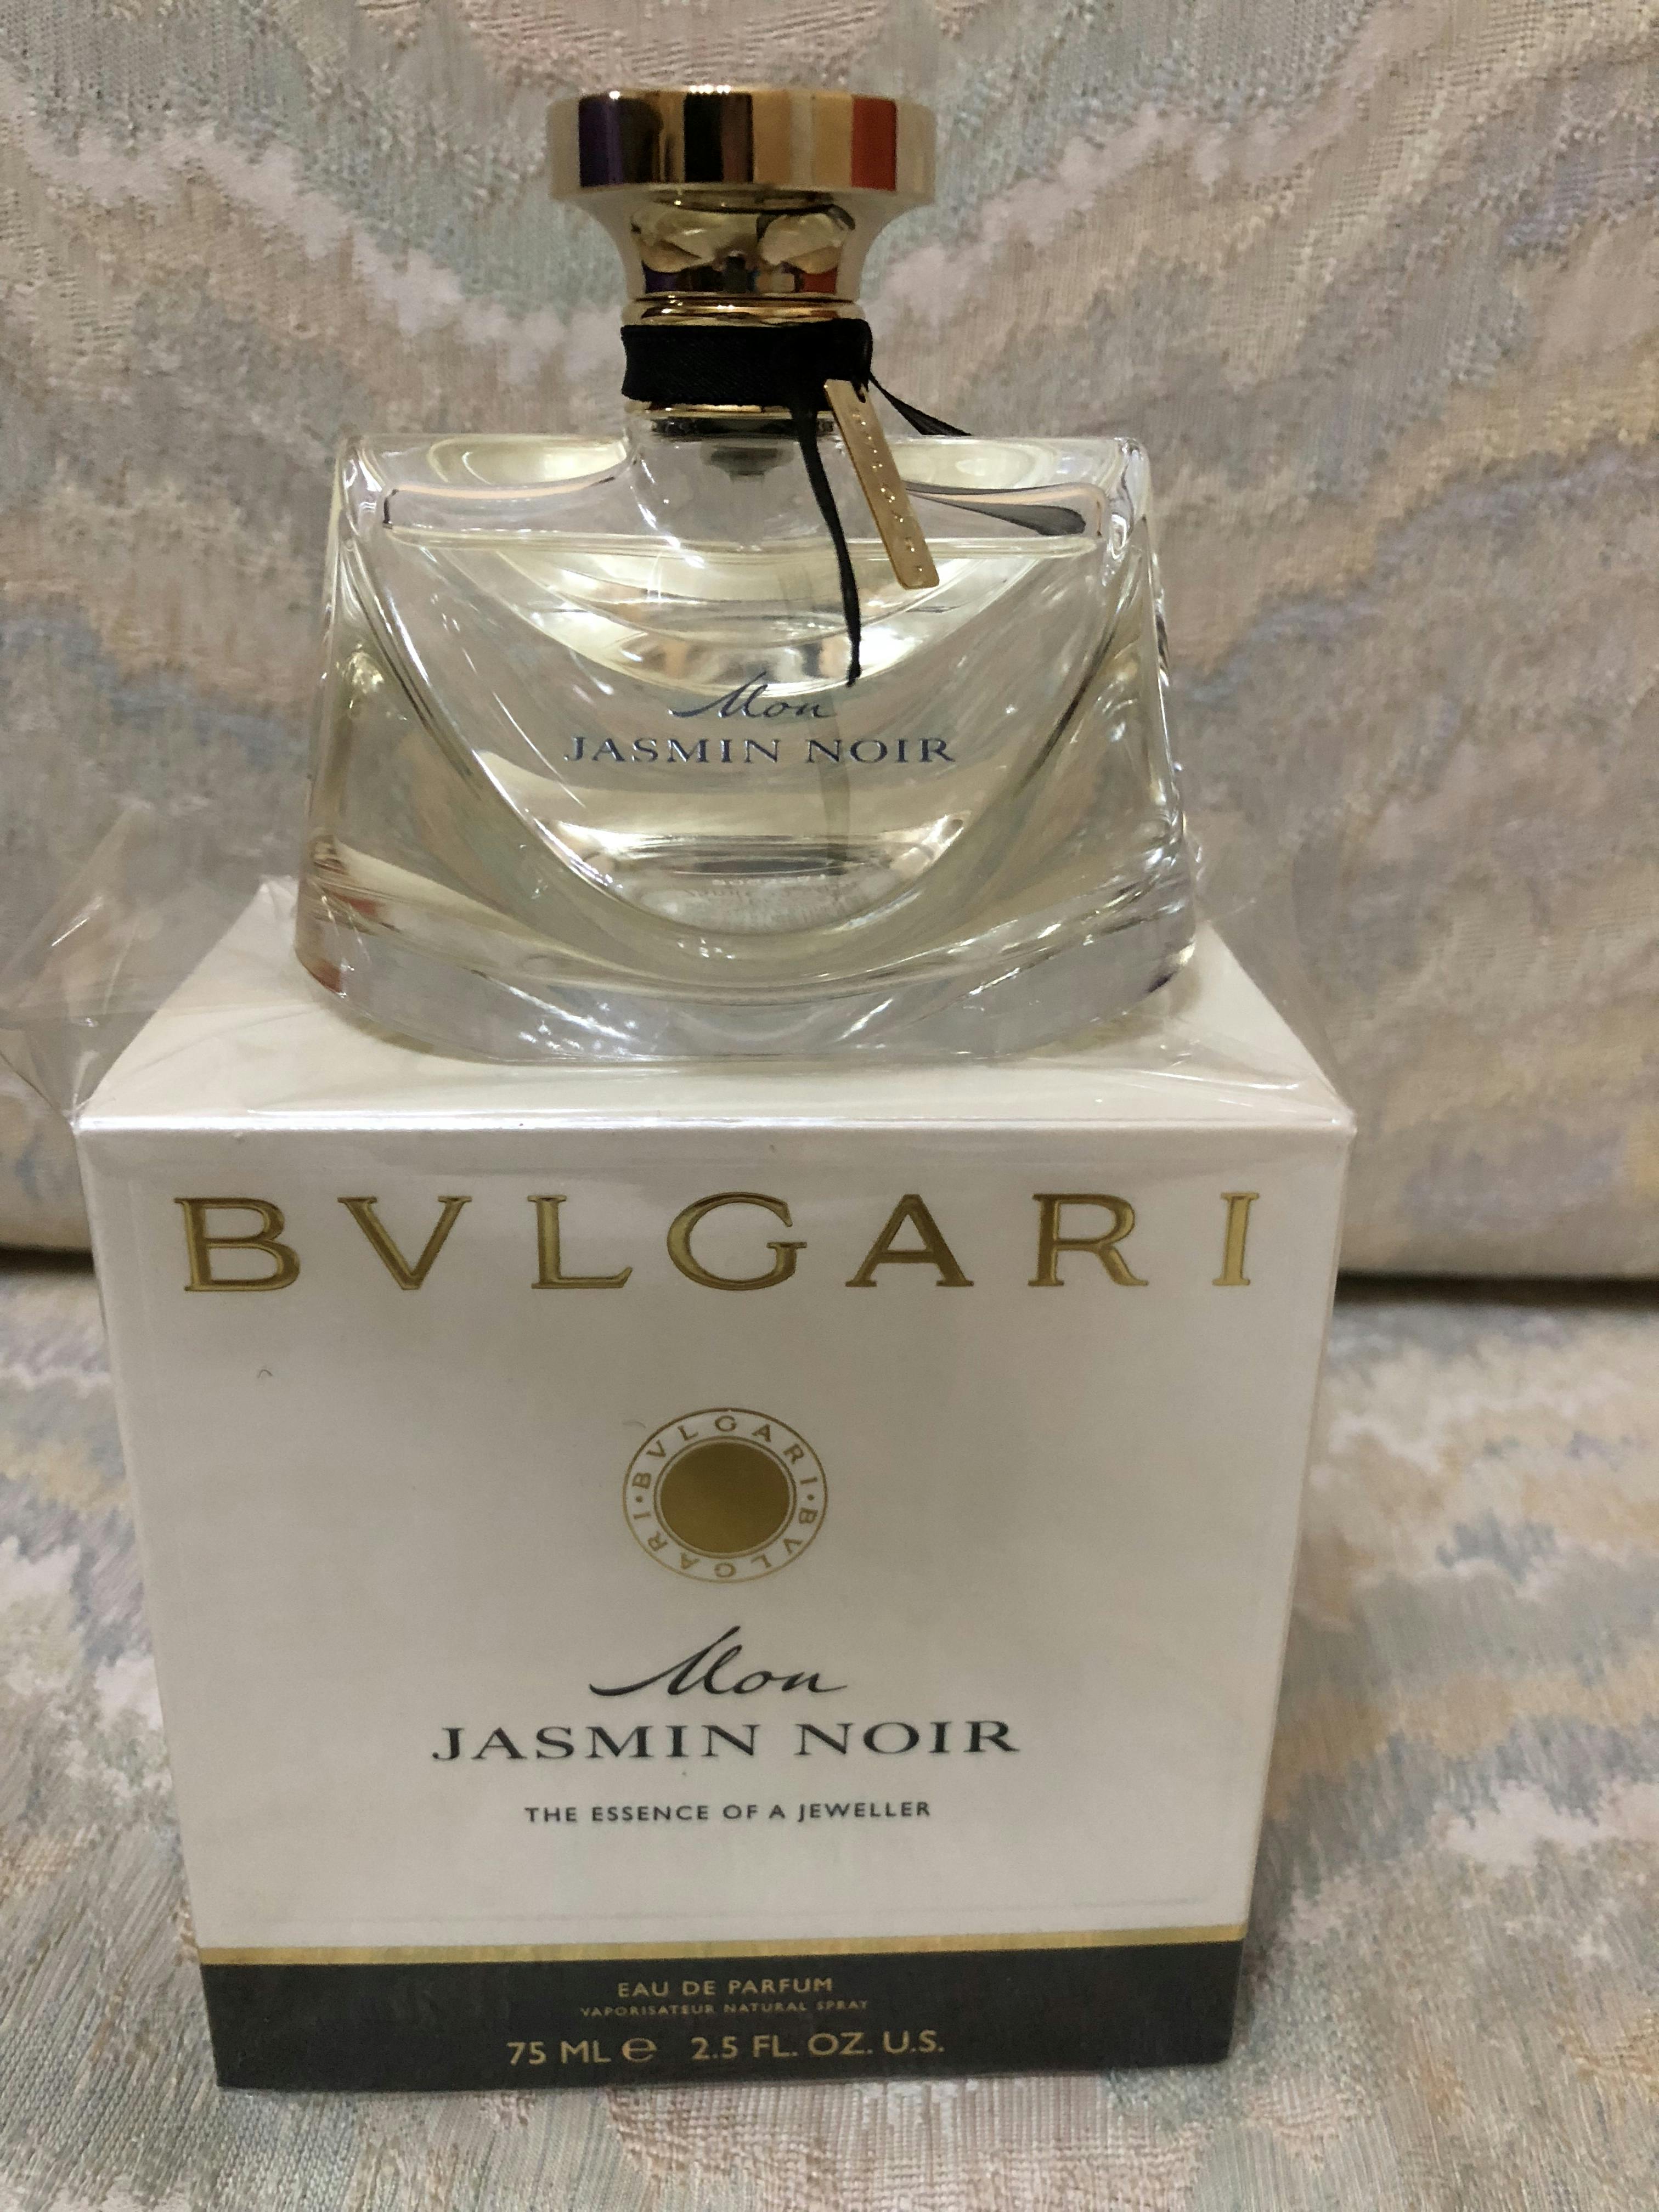 bvlgari jasmin noir price philippines